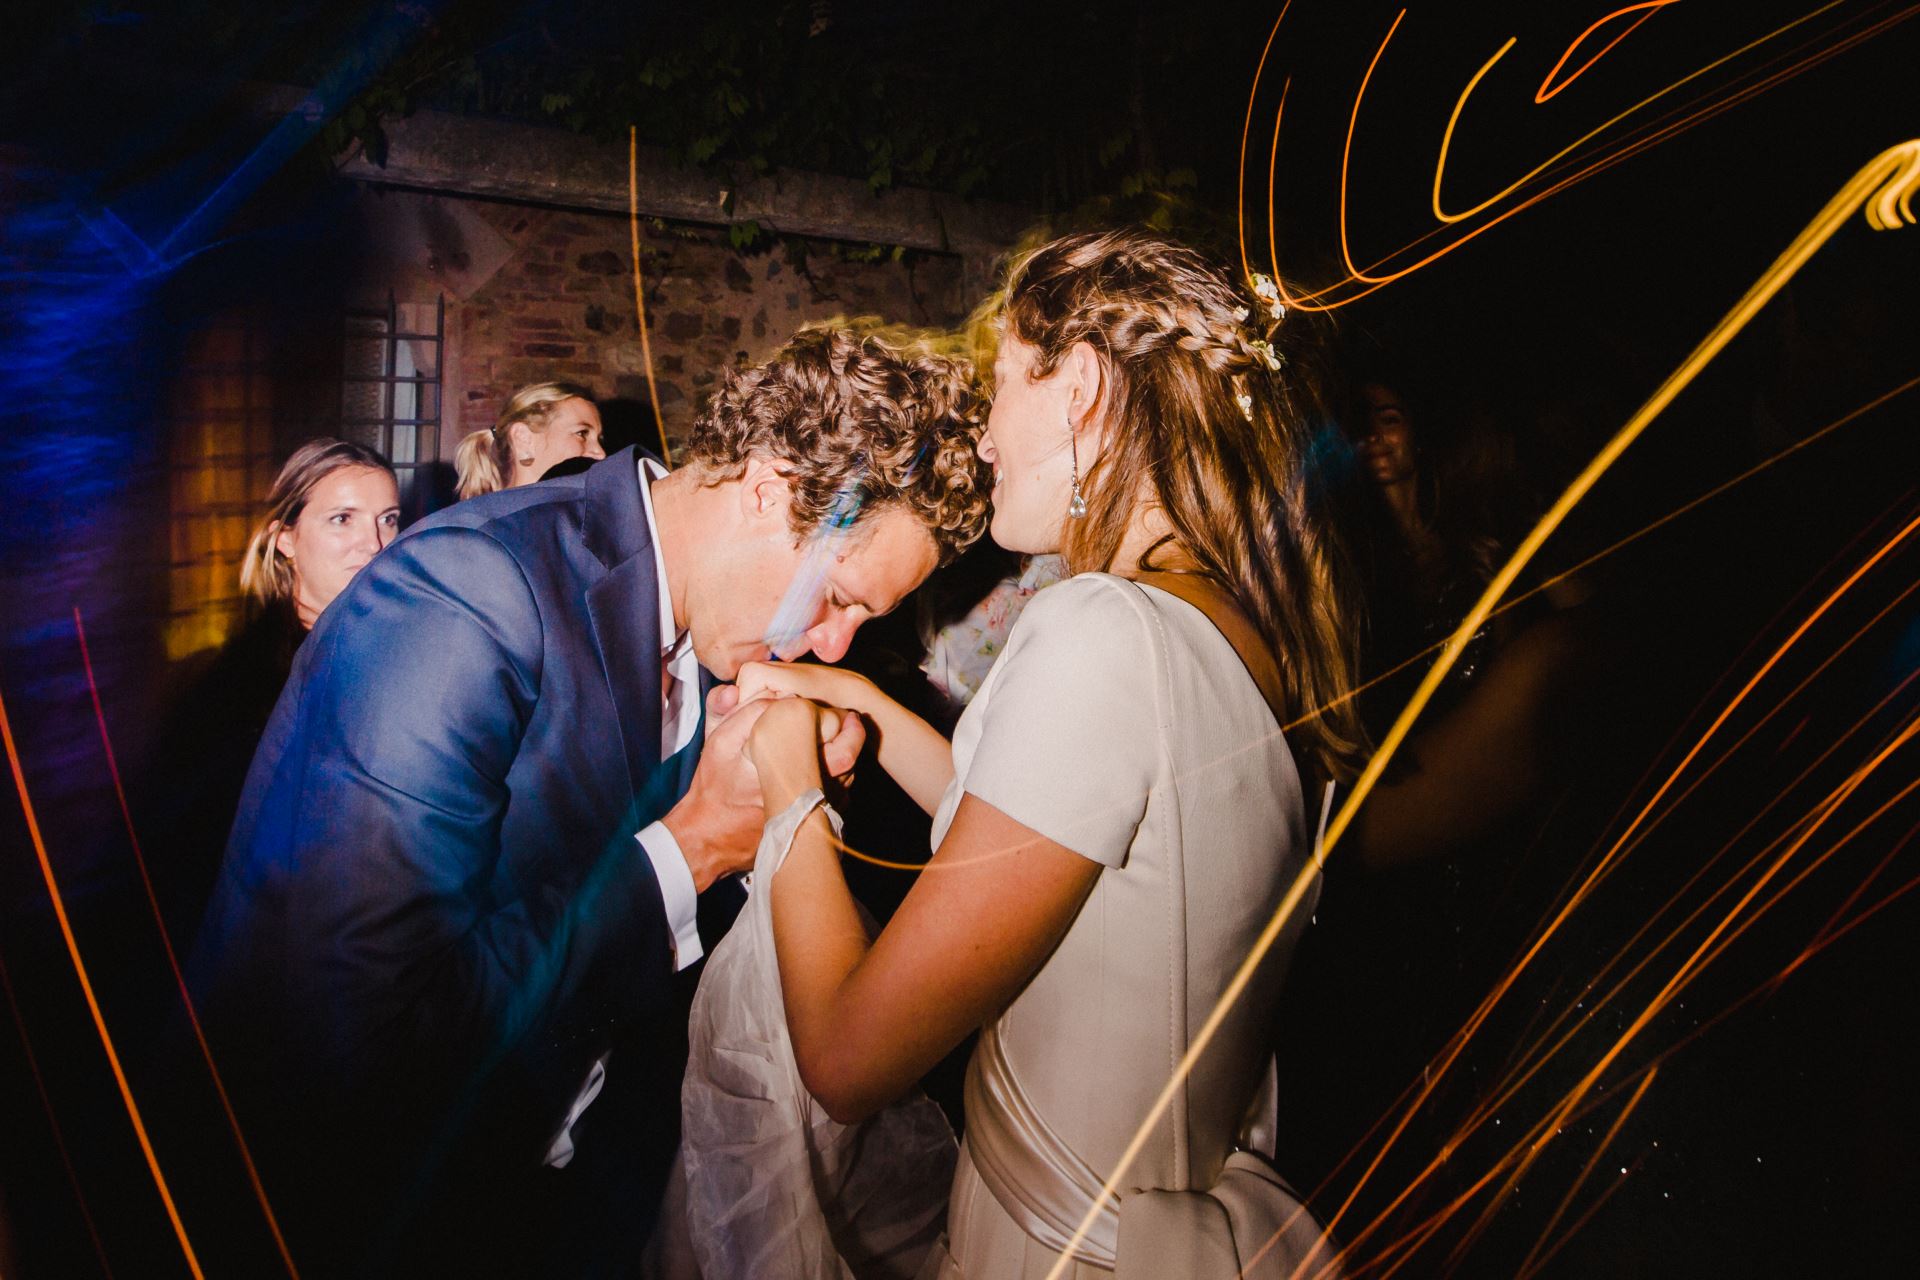 Natalia Thibault fotografo matrimonio destination wedding photographer videographer luxury italia como lake rome roma sicily masseria potenti tuscany cerimonia ceremony milan castagneto carducci